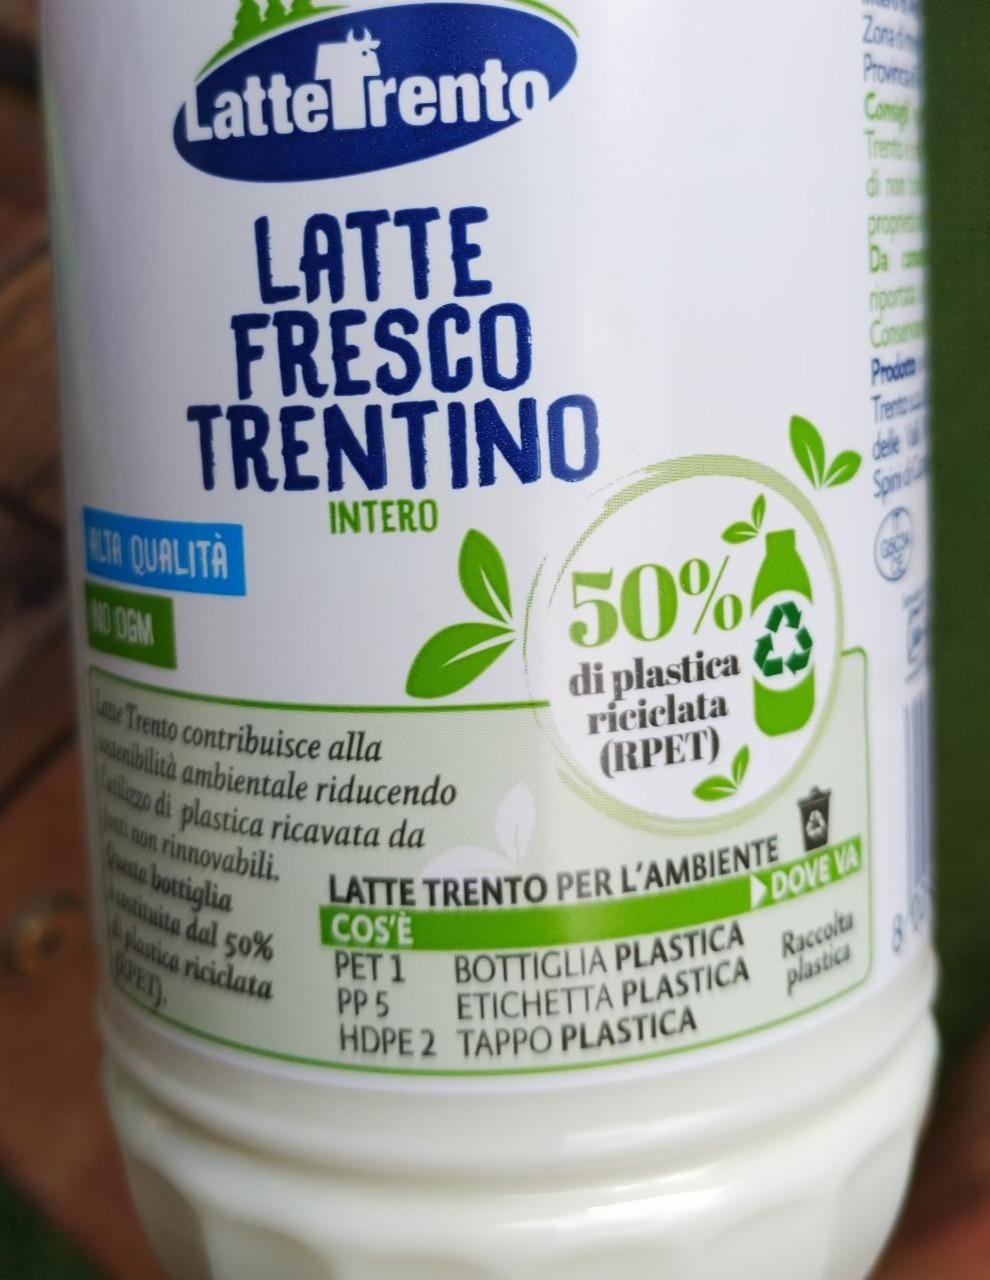 Fotografie - Latte Fresco Trentino Intero LatteTrento